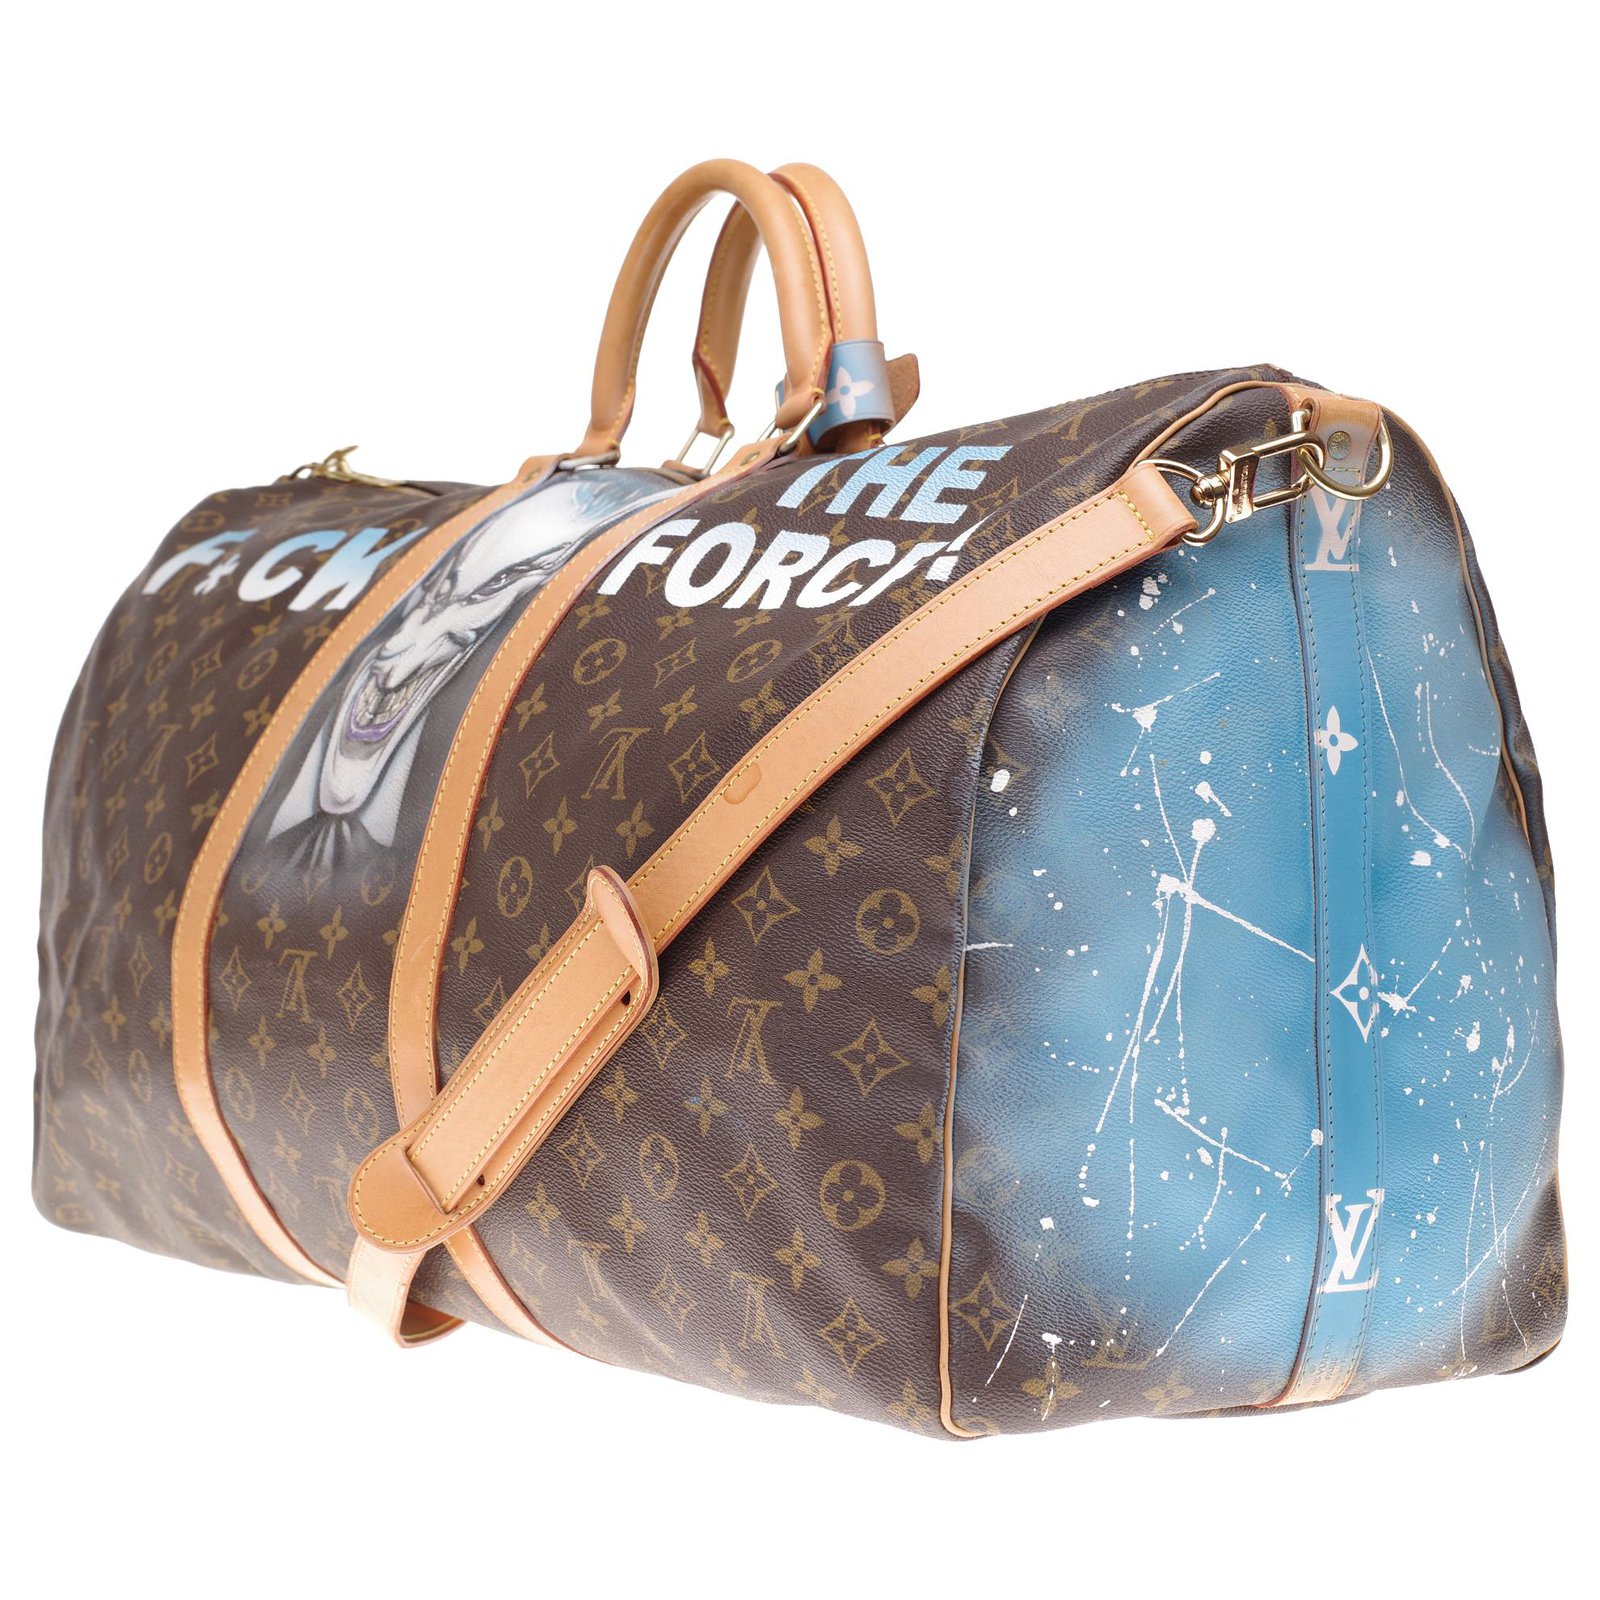 Customized Louis Vuitton Keepall 60 BATBAG Travel bag in brown